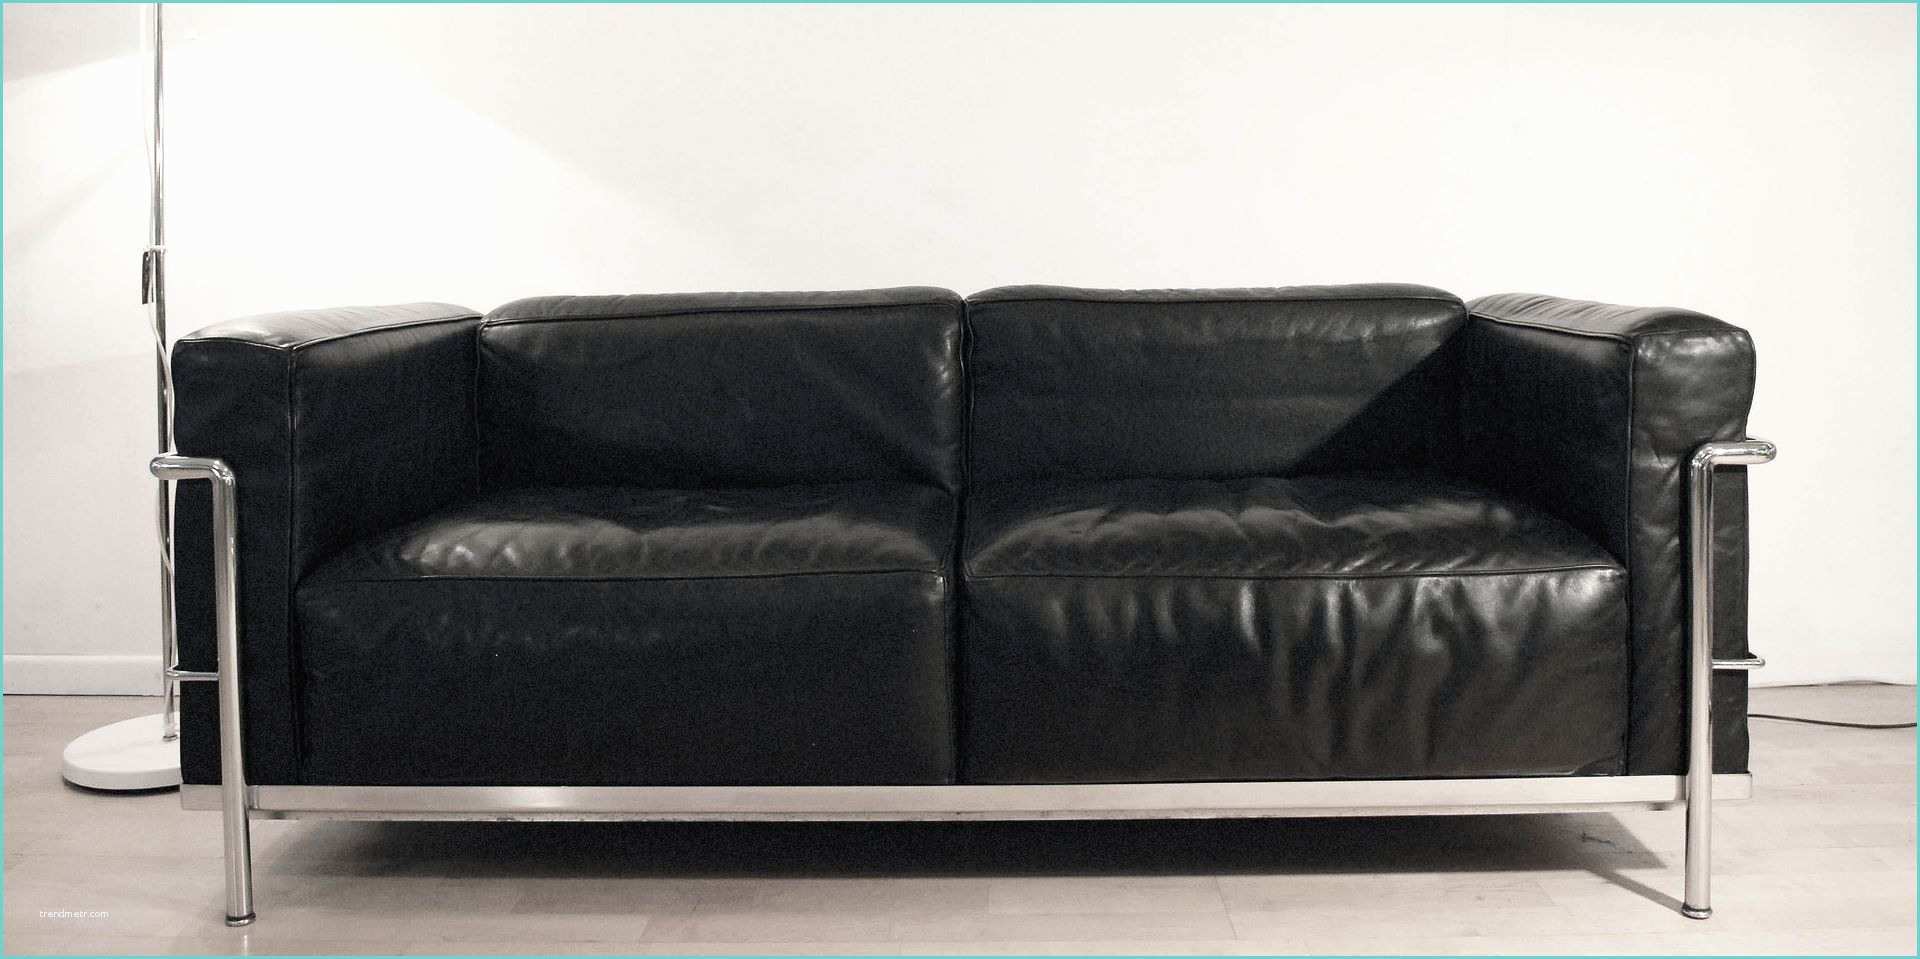 Le Corbusier Grand Confort Lc3 Lc3 Grand Confort sofa by Le Corbusier for Cassina for